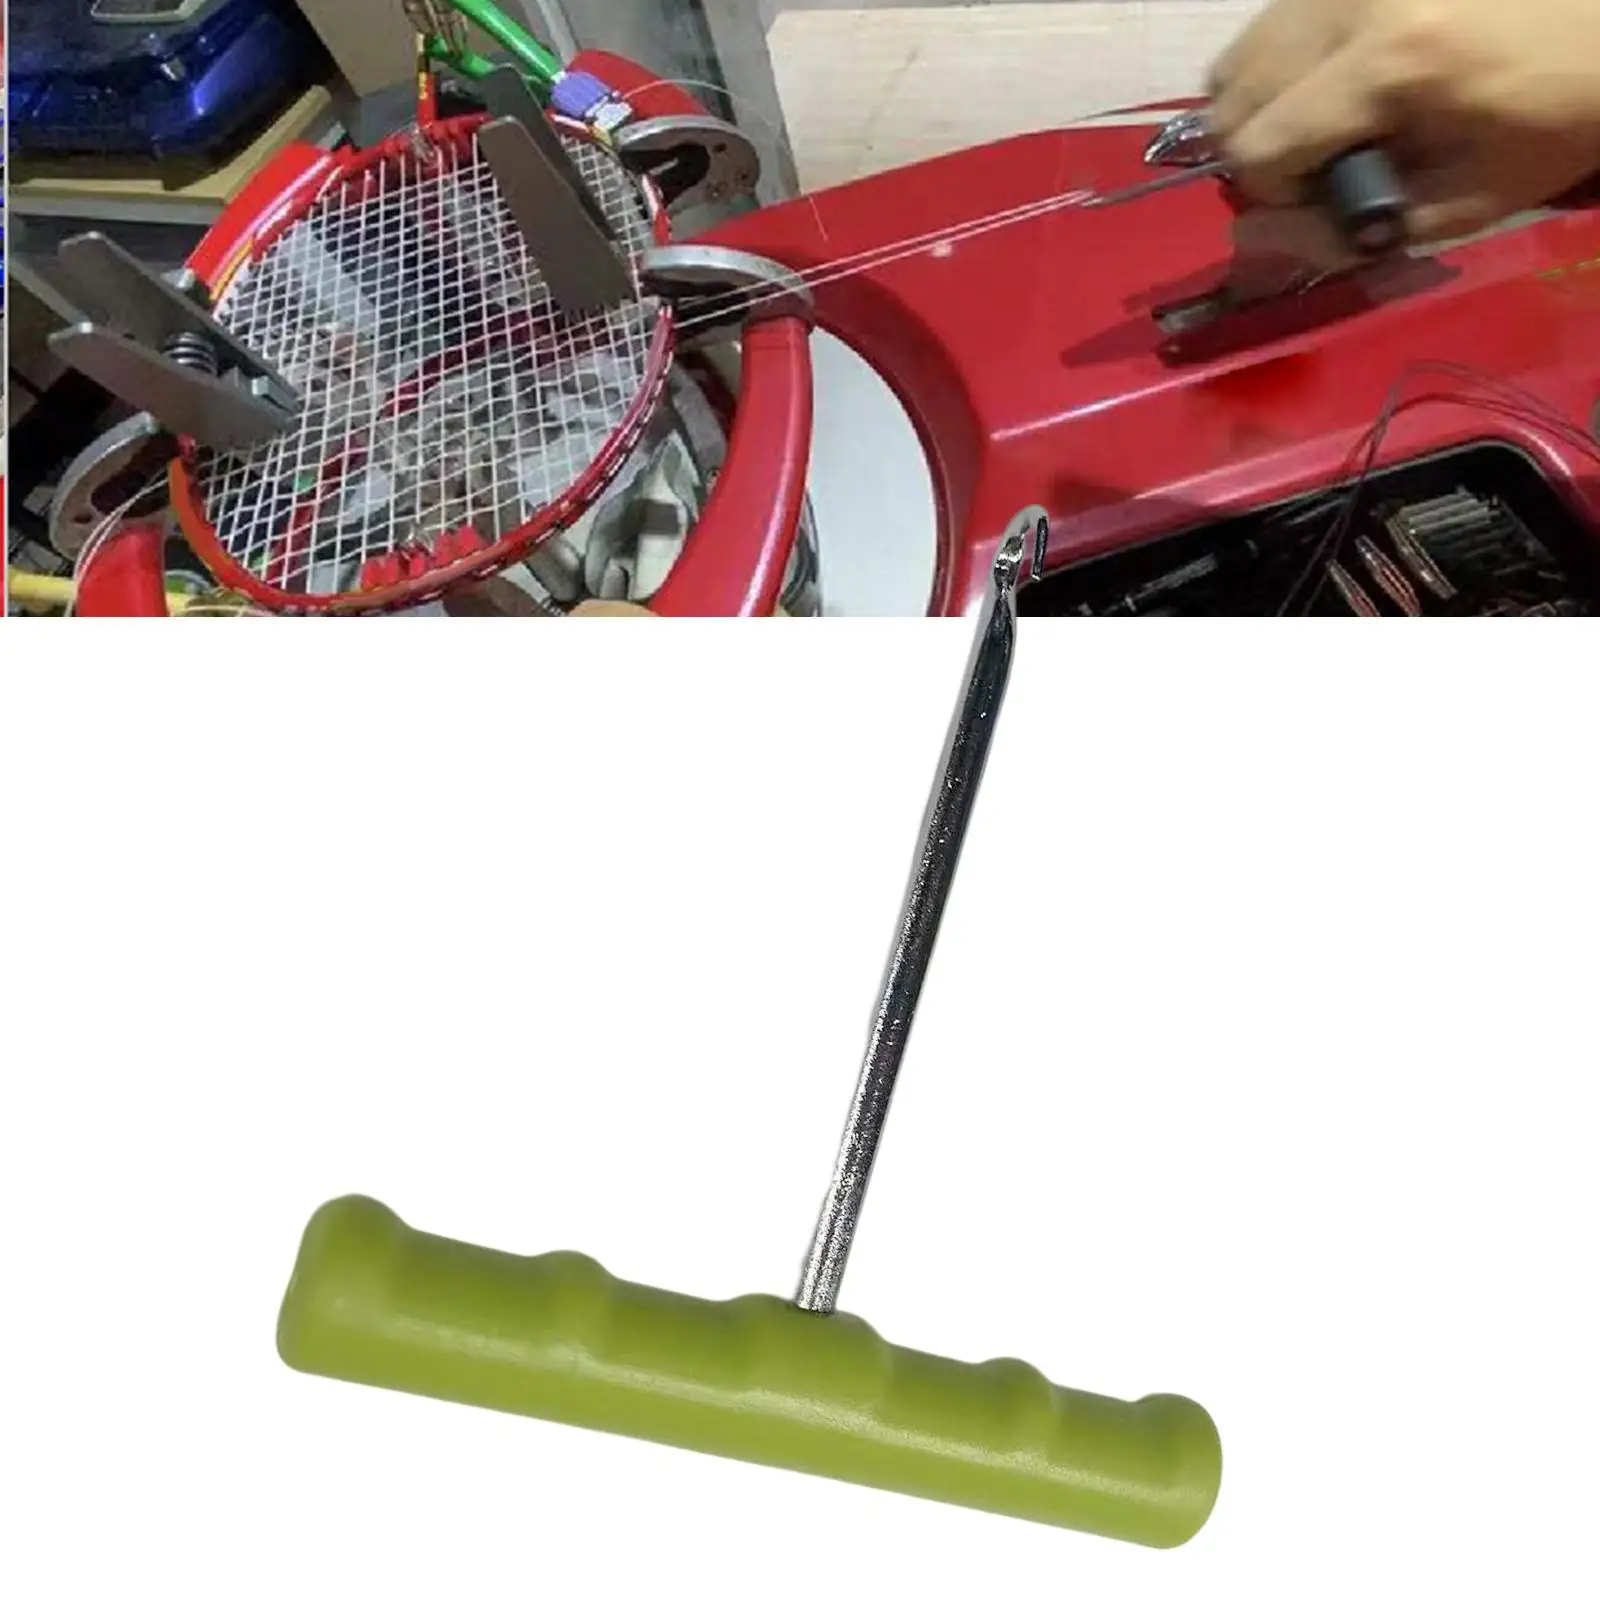 Racket String Puller Racket Stringing Tool Stringing Stringer Hook Repair Restring Hand Tool for Badminton Tennis Squash Racquet